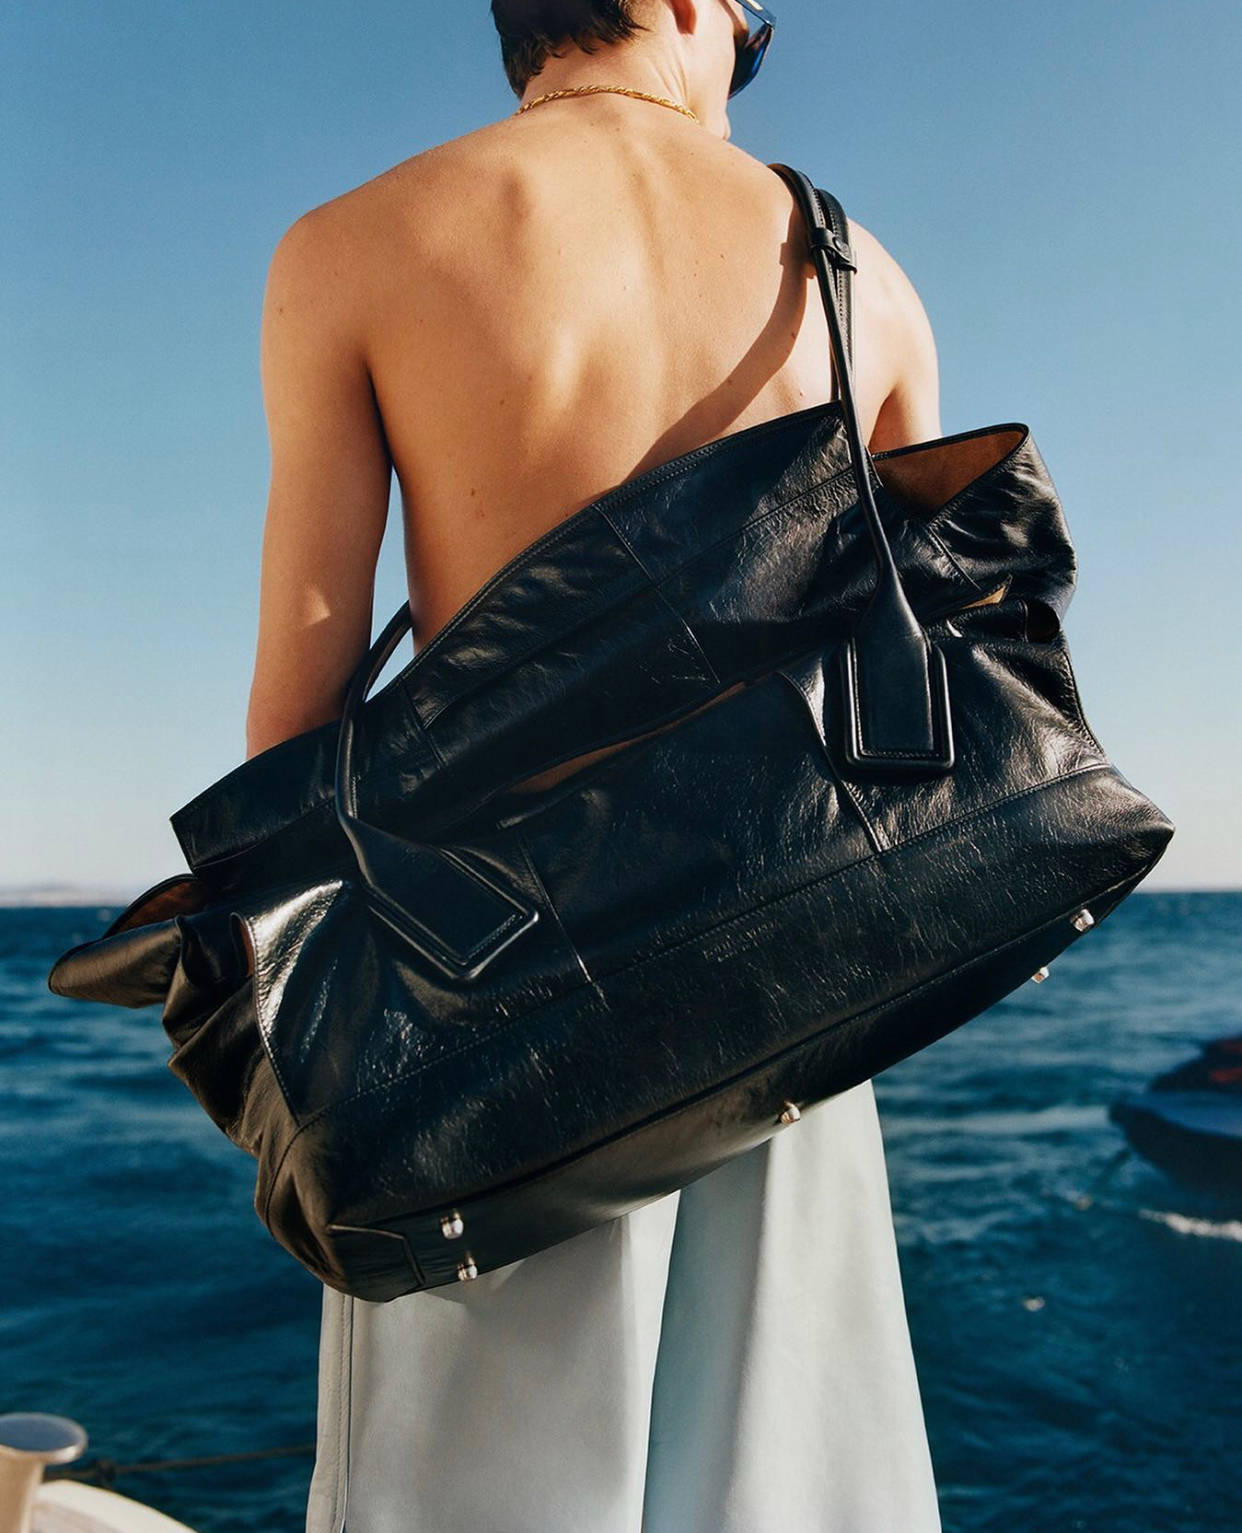 Topless Model With Black Bottega Veneta Bag Background